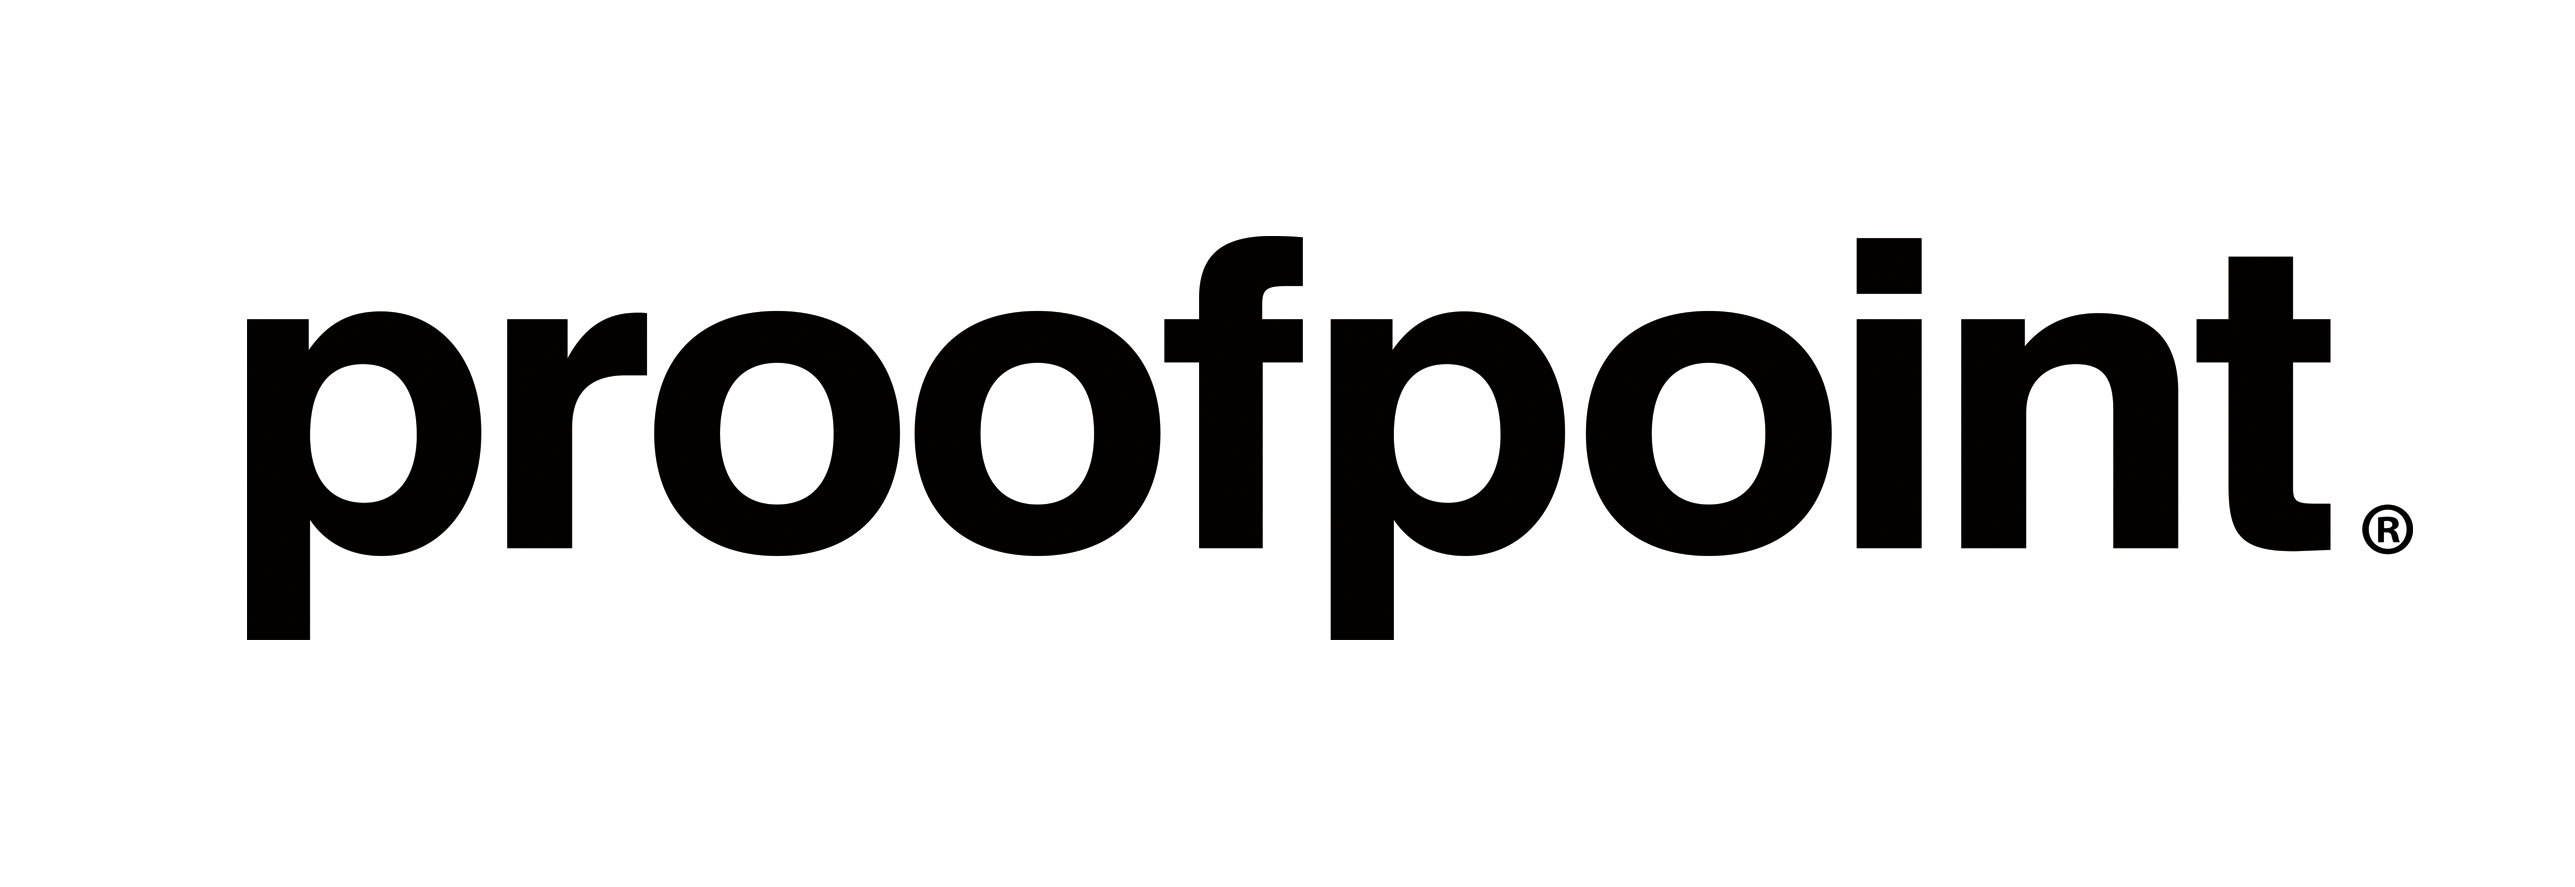 proofpoint logo color